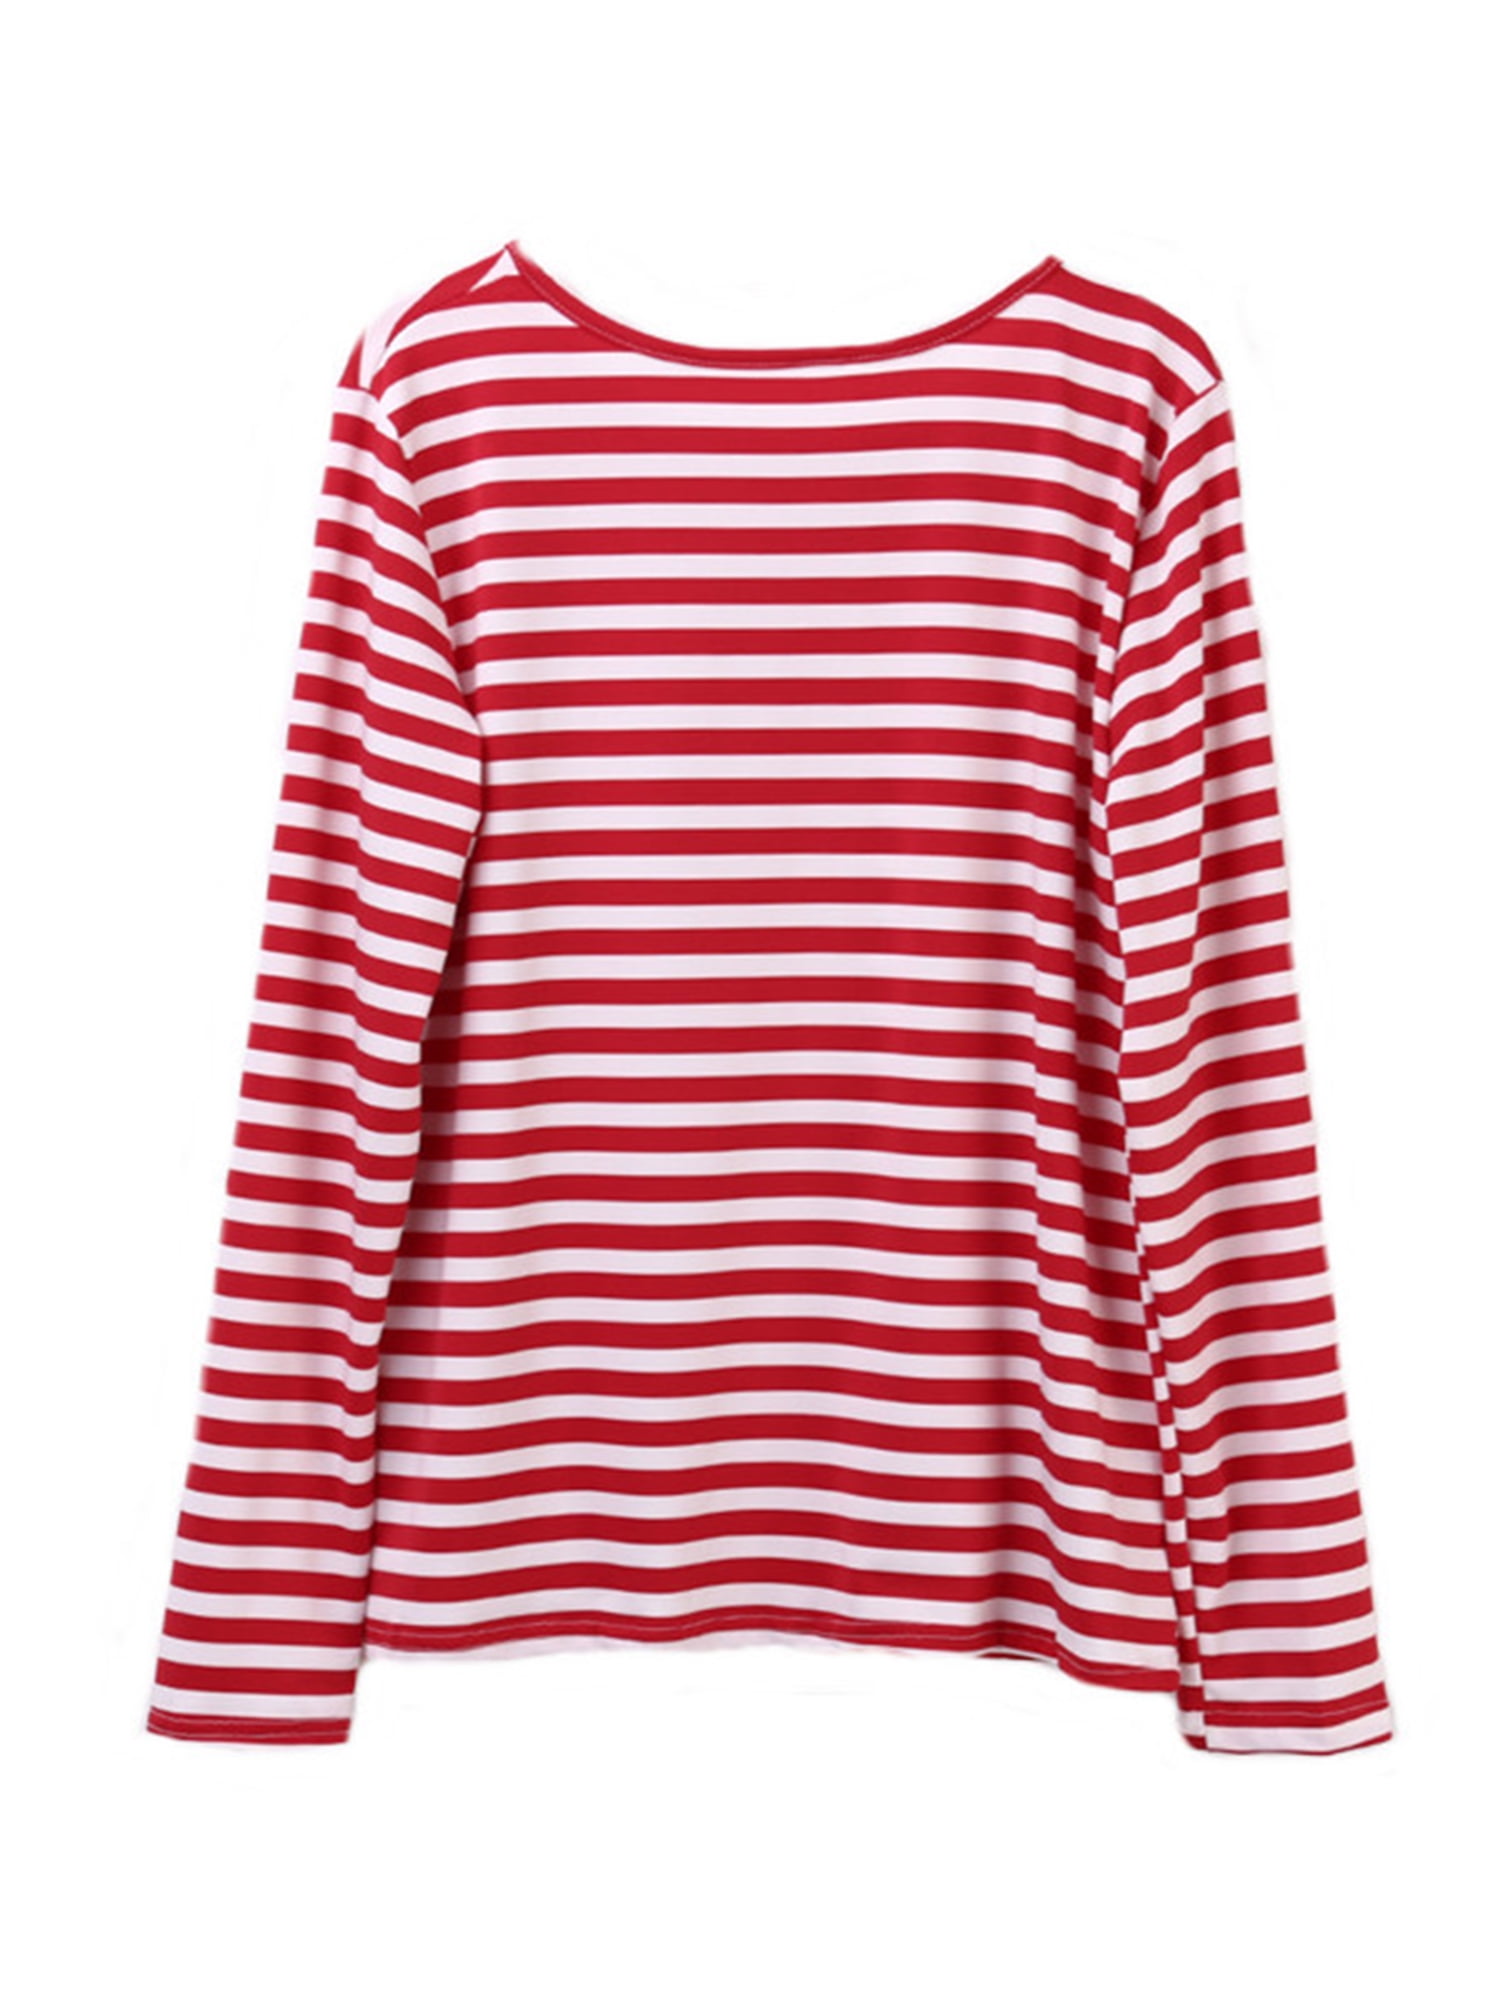 Red White Striped Tshirt Women Long Sleeve Cotton Loose Tee T Shirt Female Basic O-Neck Tops - Walmart.com